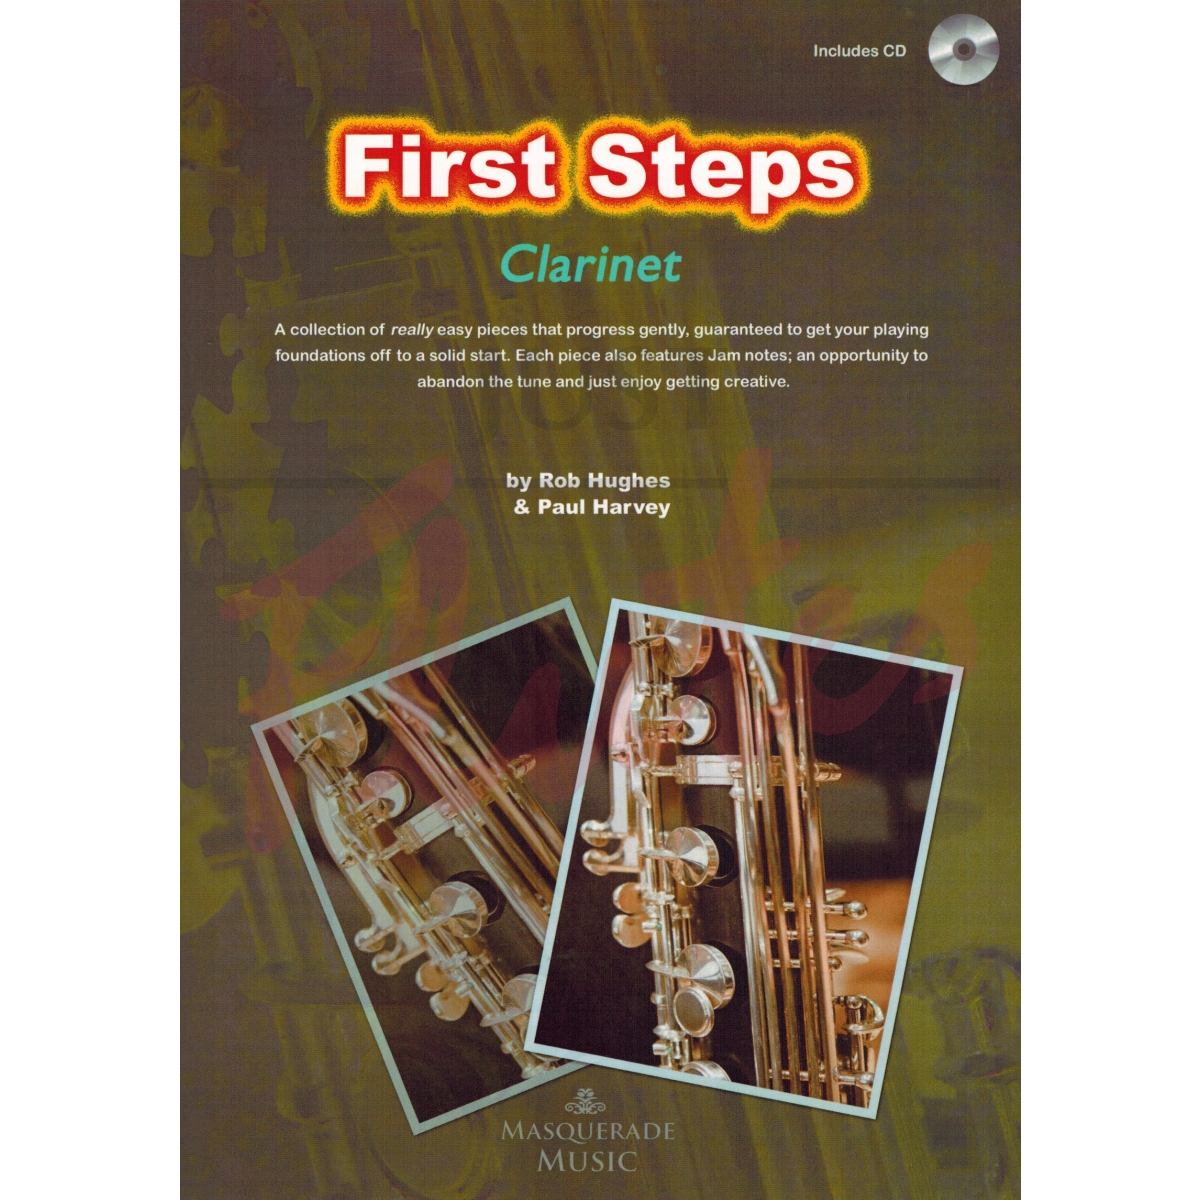 First Steps [Clarinet]